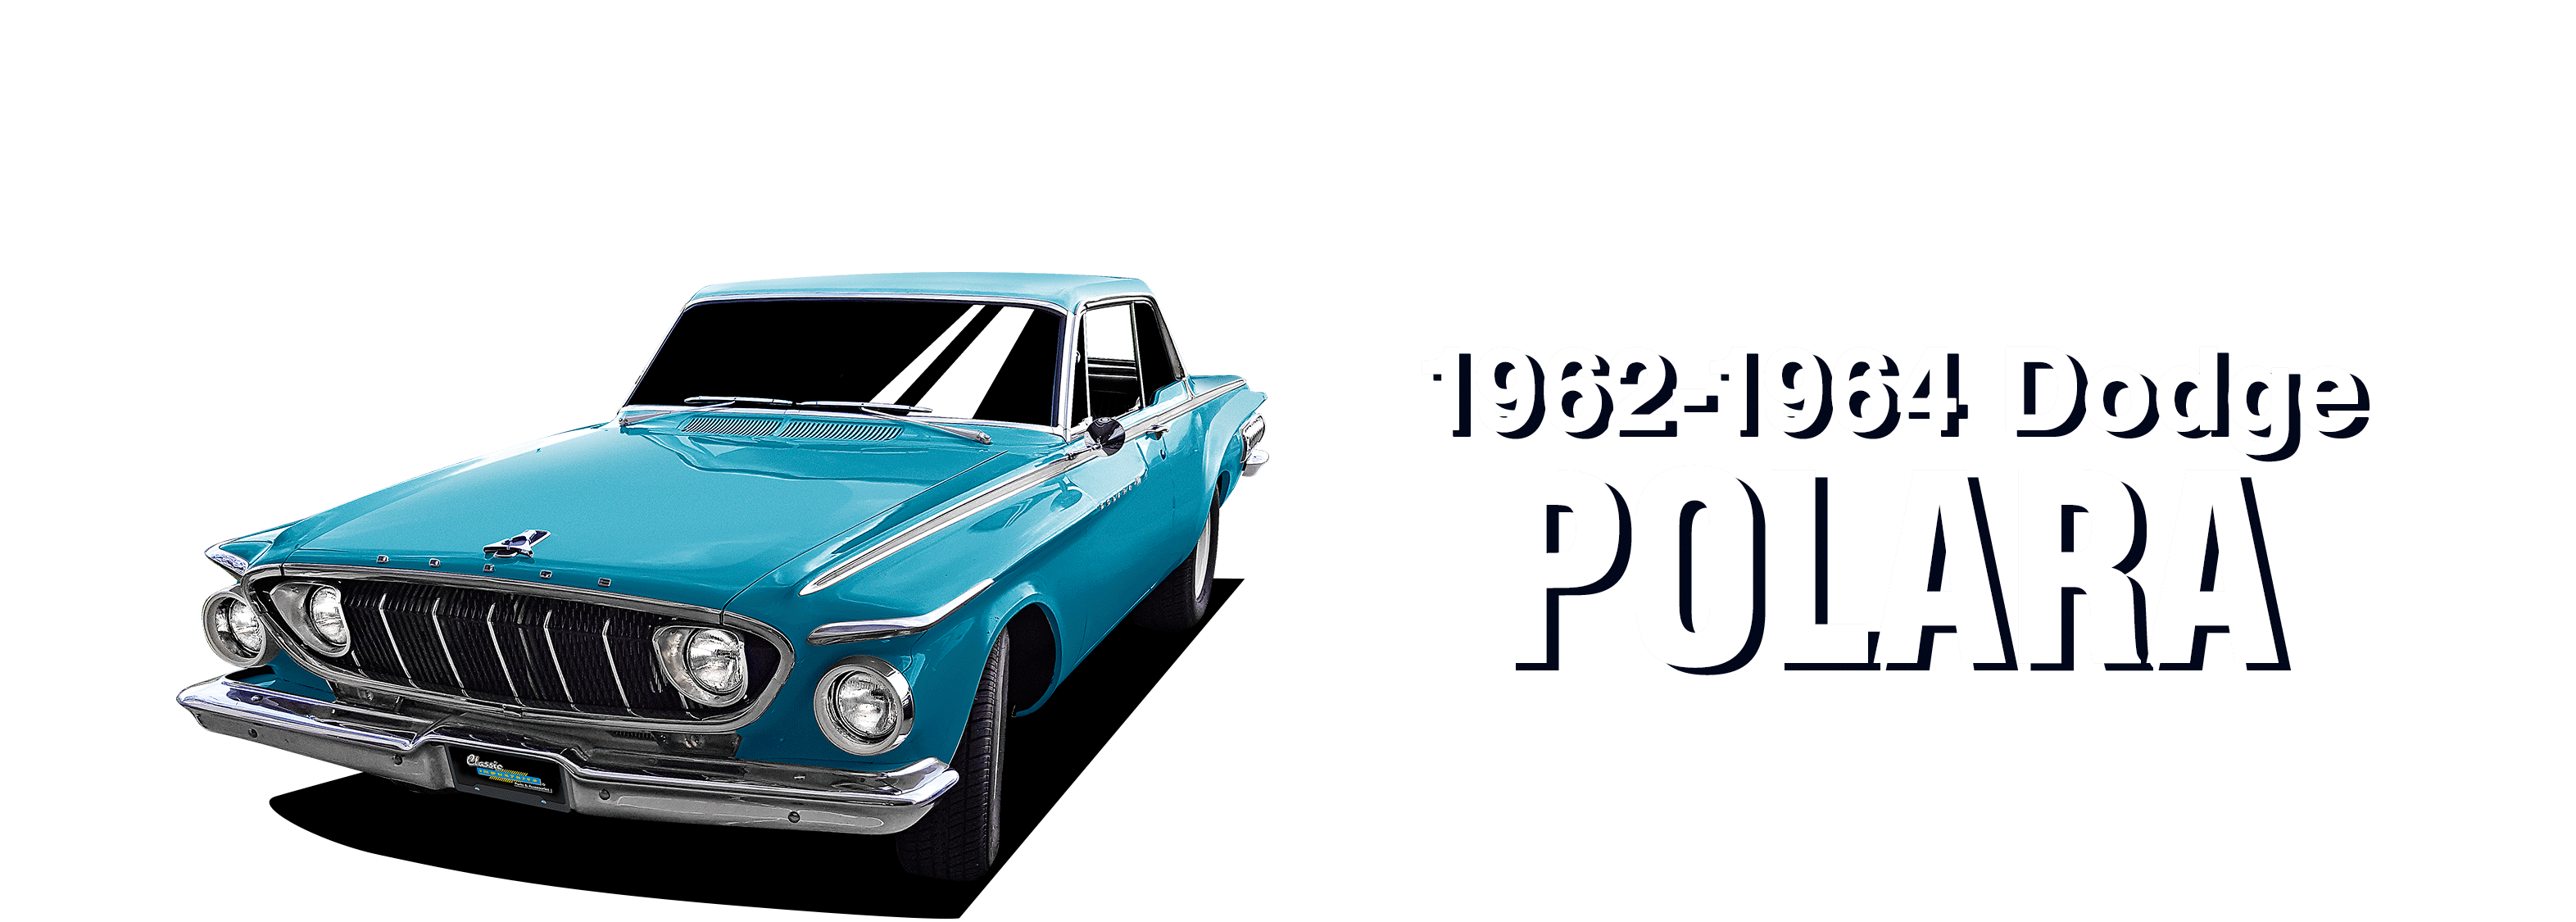 Dodge-Polara-vehicle-desktop